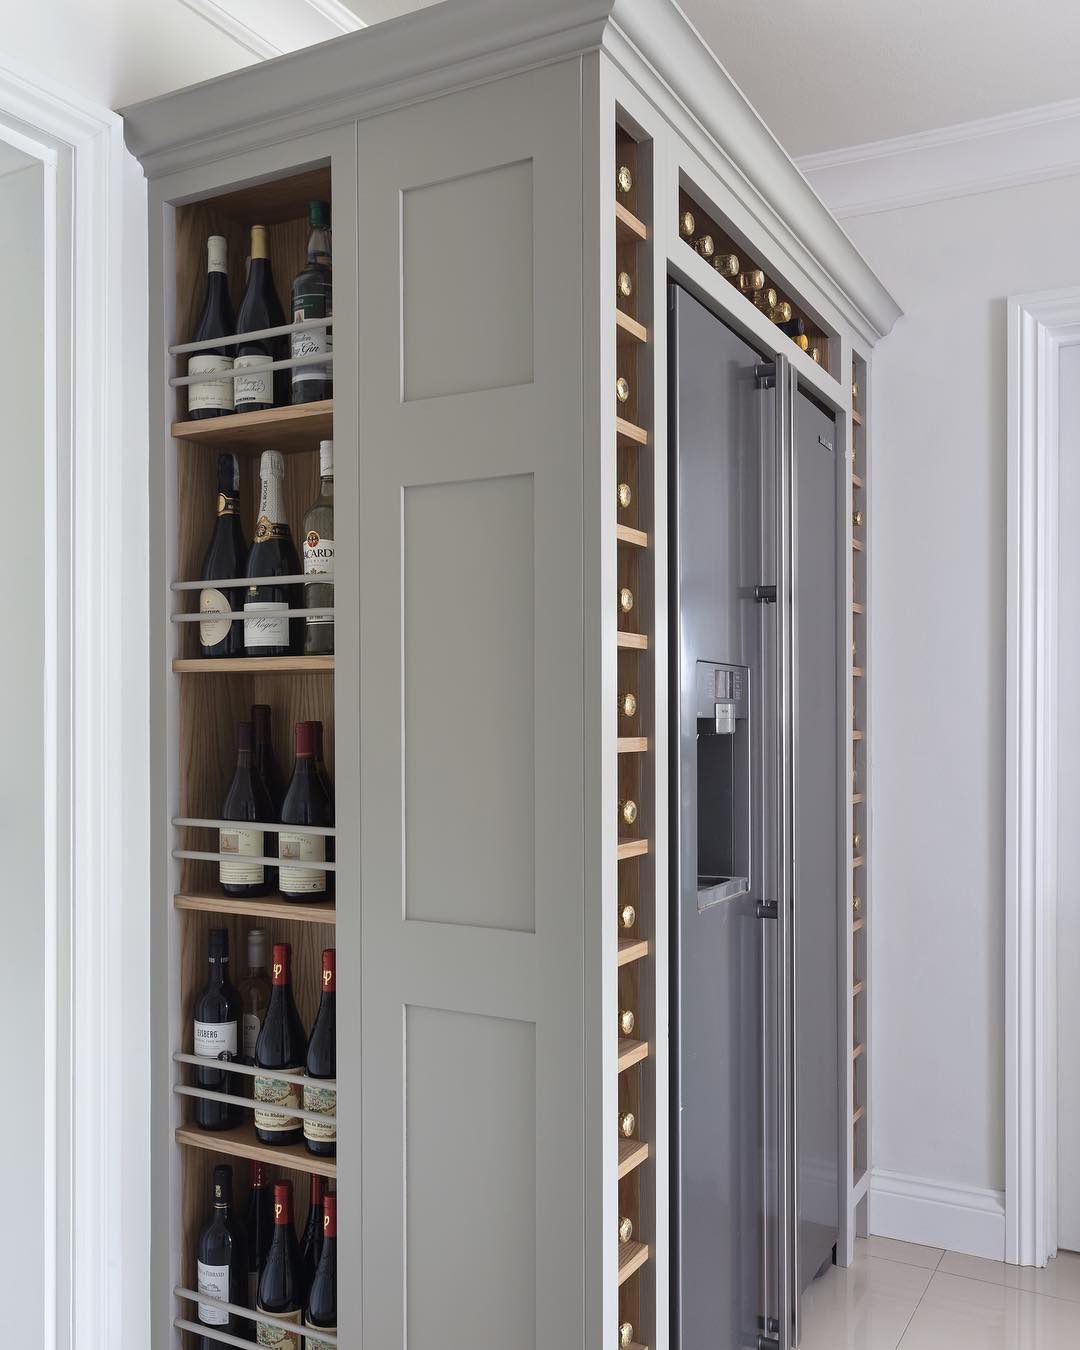 Custom-built wine storage around refrigerator. Photo by Instagram user @charliekinghamcabinetmakers